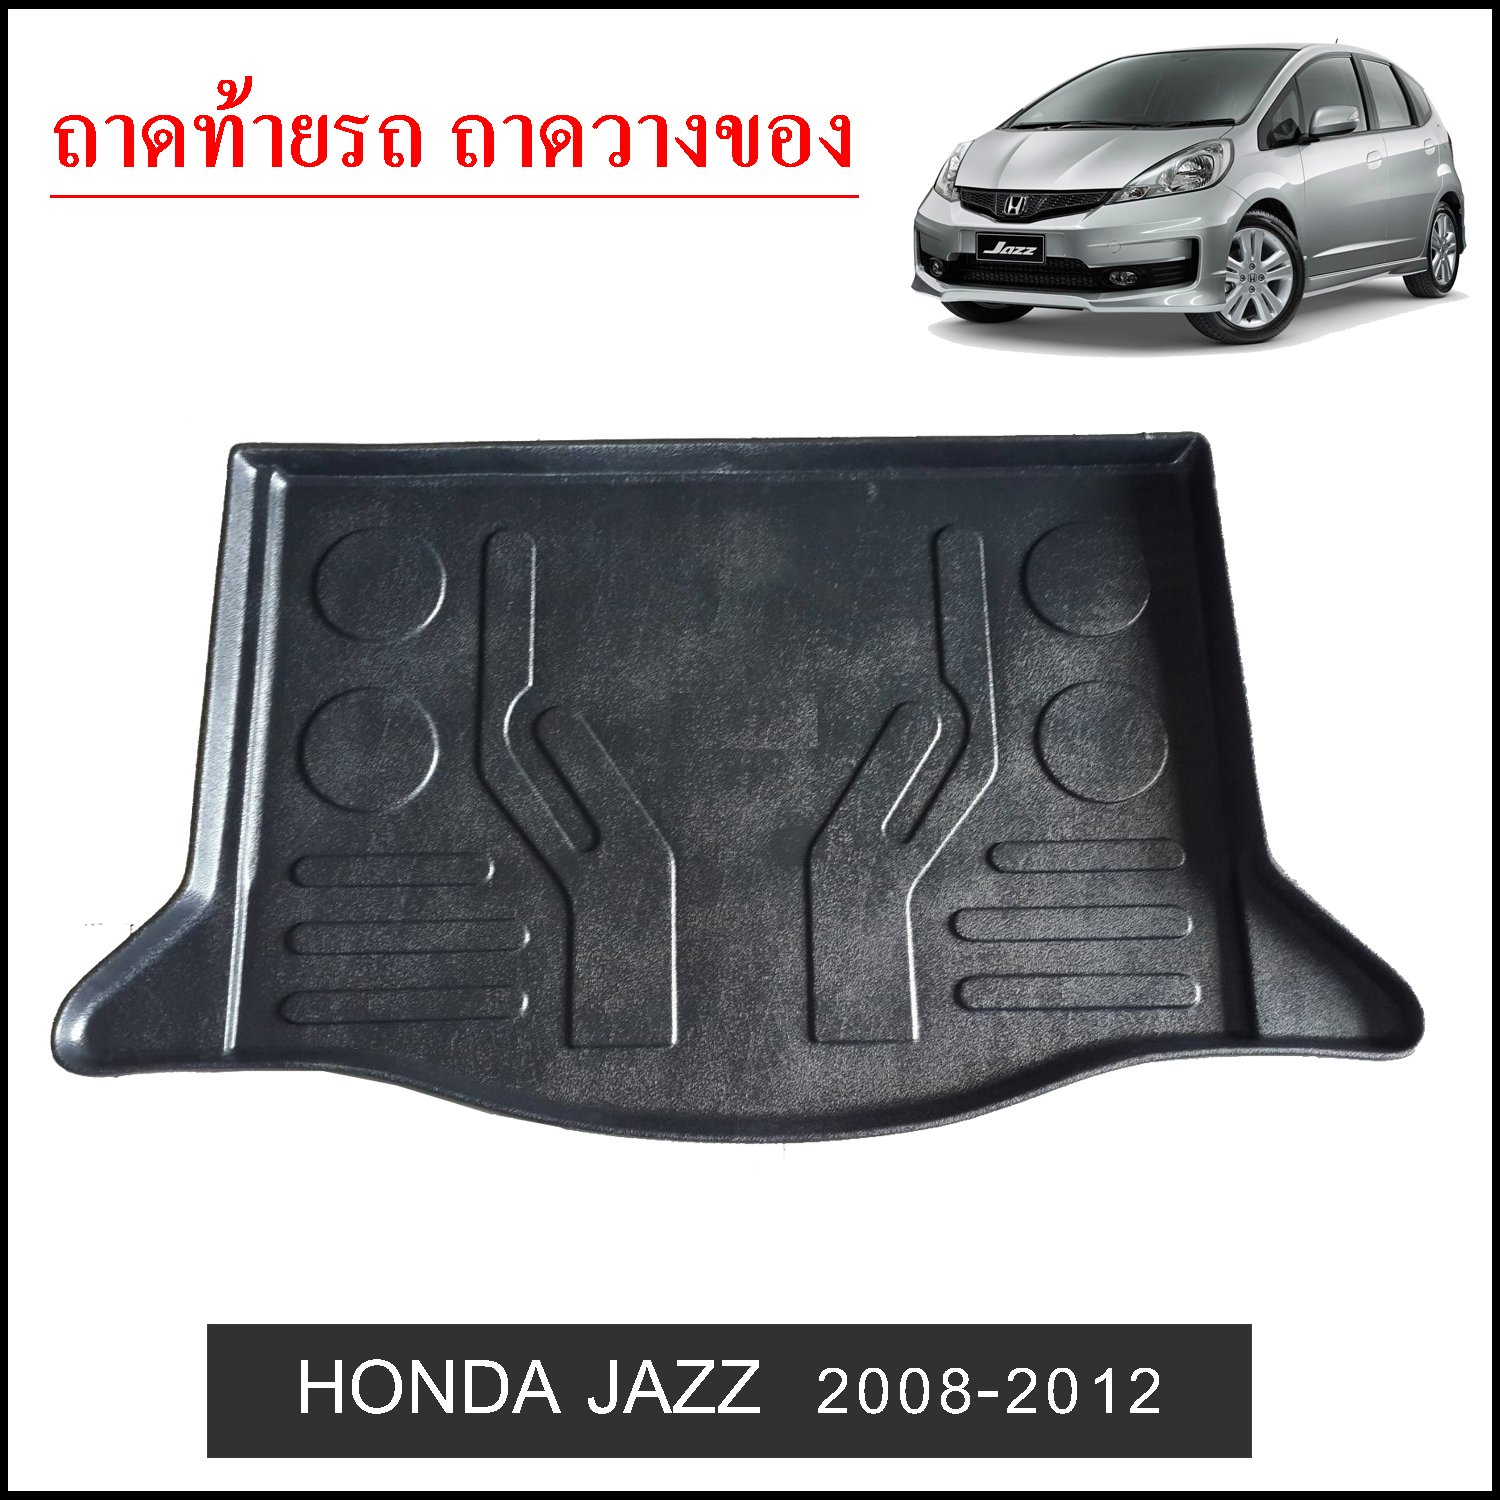 Honda Jazz 2008-2012